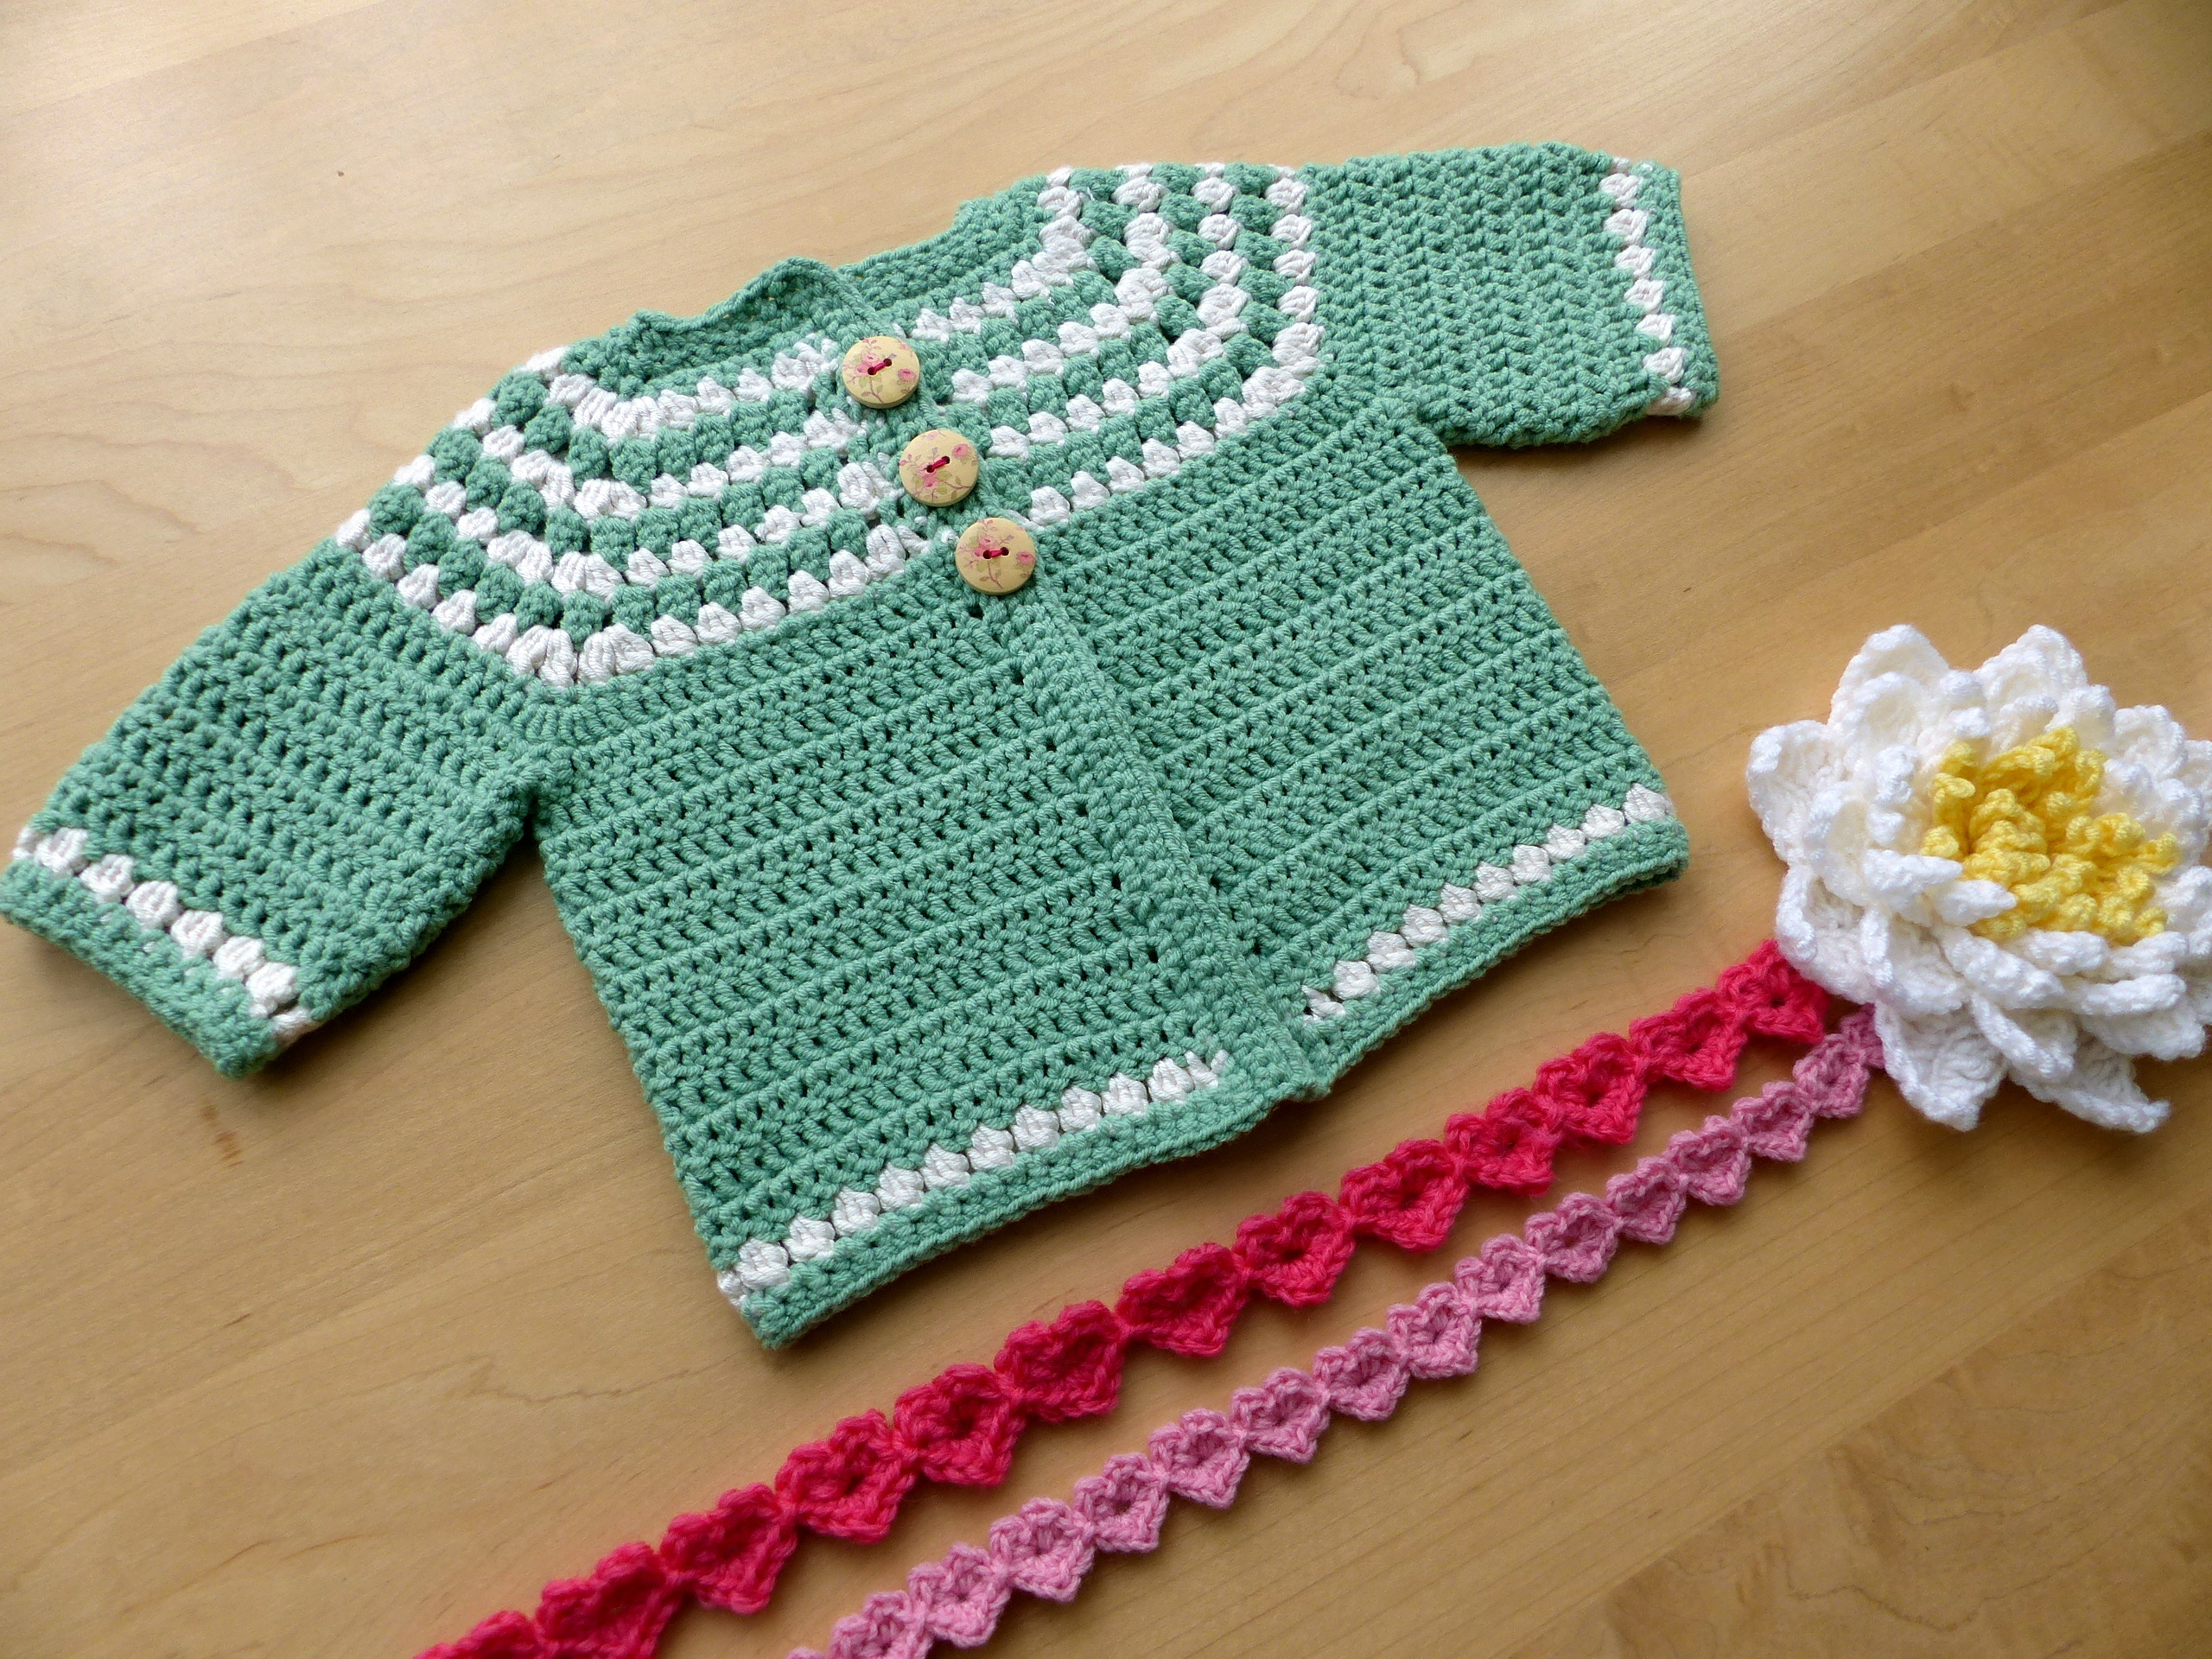 Crochet Patterns For Babies Cluster Yoke Ba Cardigan Make My Day Creative